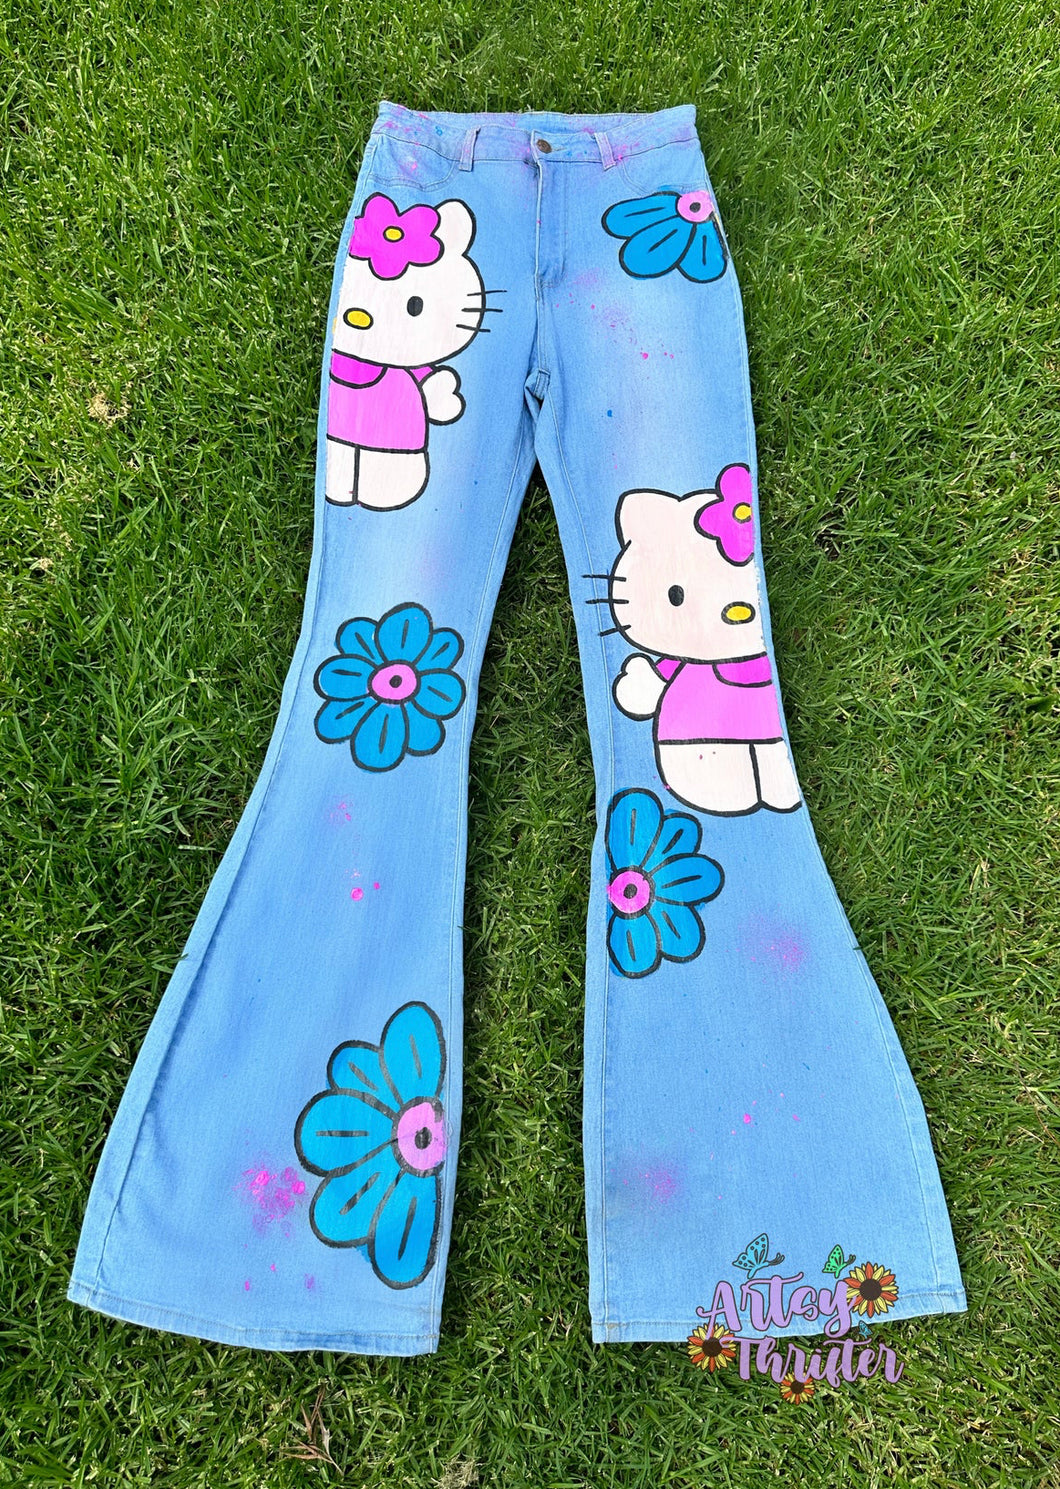 Hello Kitty Jeans